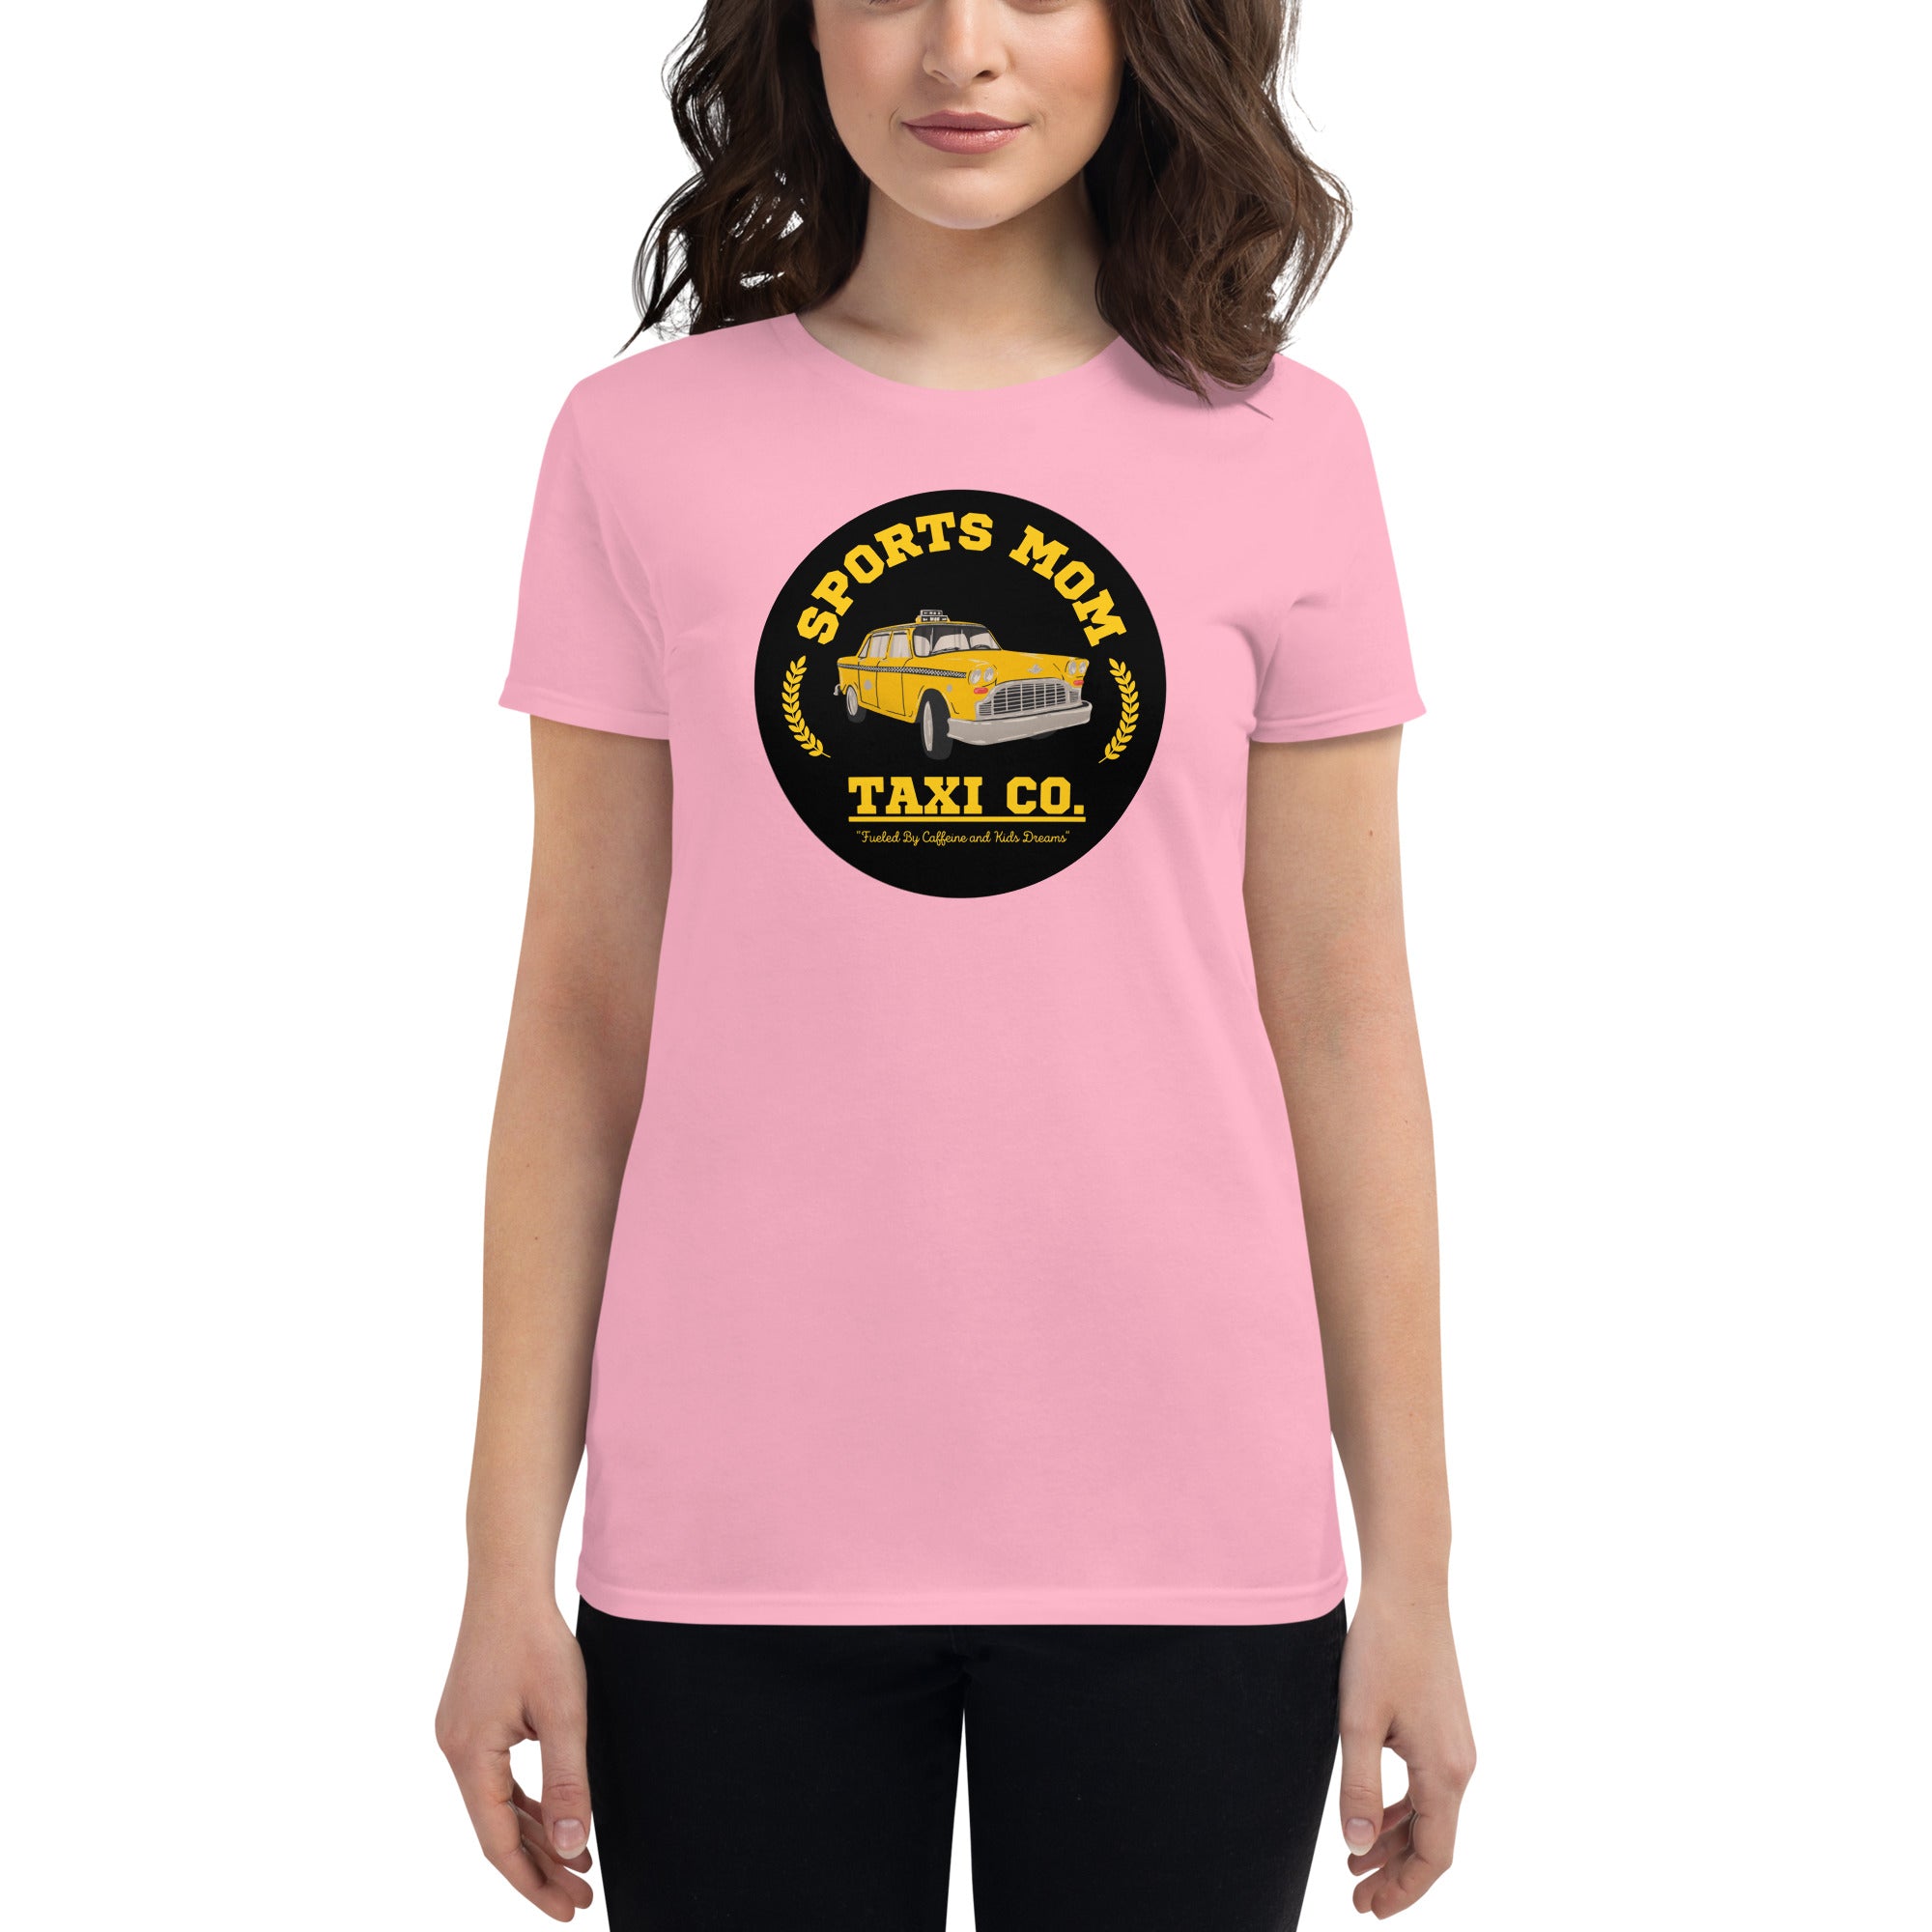 The Sports Mom Taxi Co. Original Classic T-Shirt